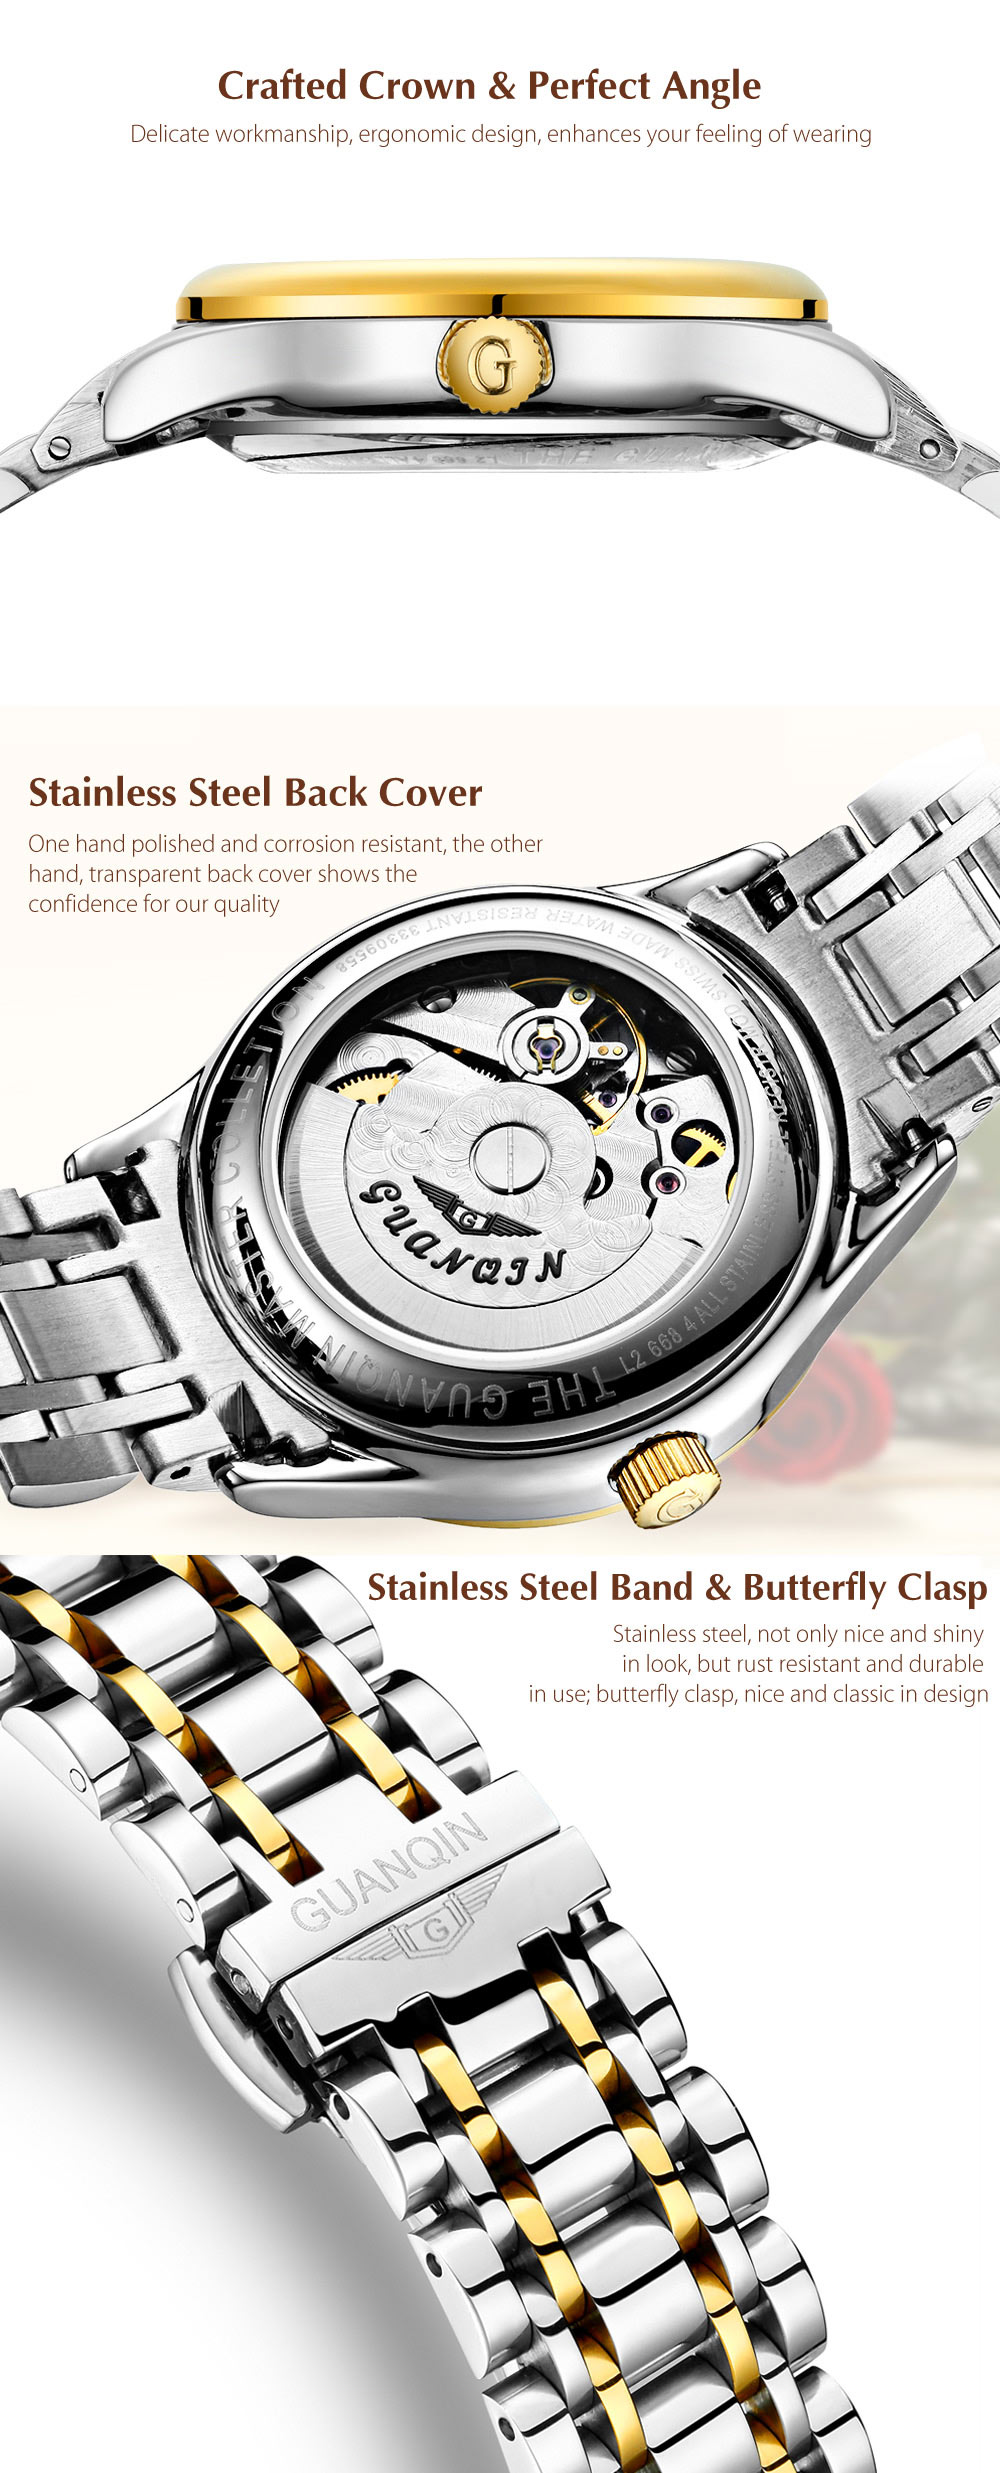 GUANQIN GJ18004 Women Auto Mechanical Watch Date Display Sapphire Mirror 3ATM Wristwatch